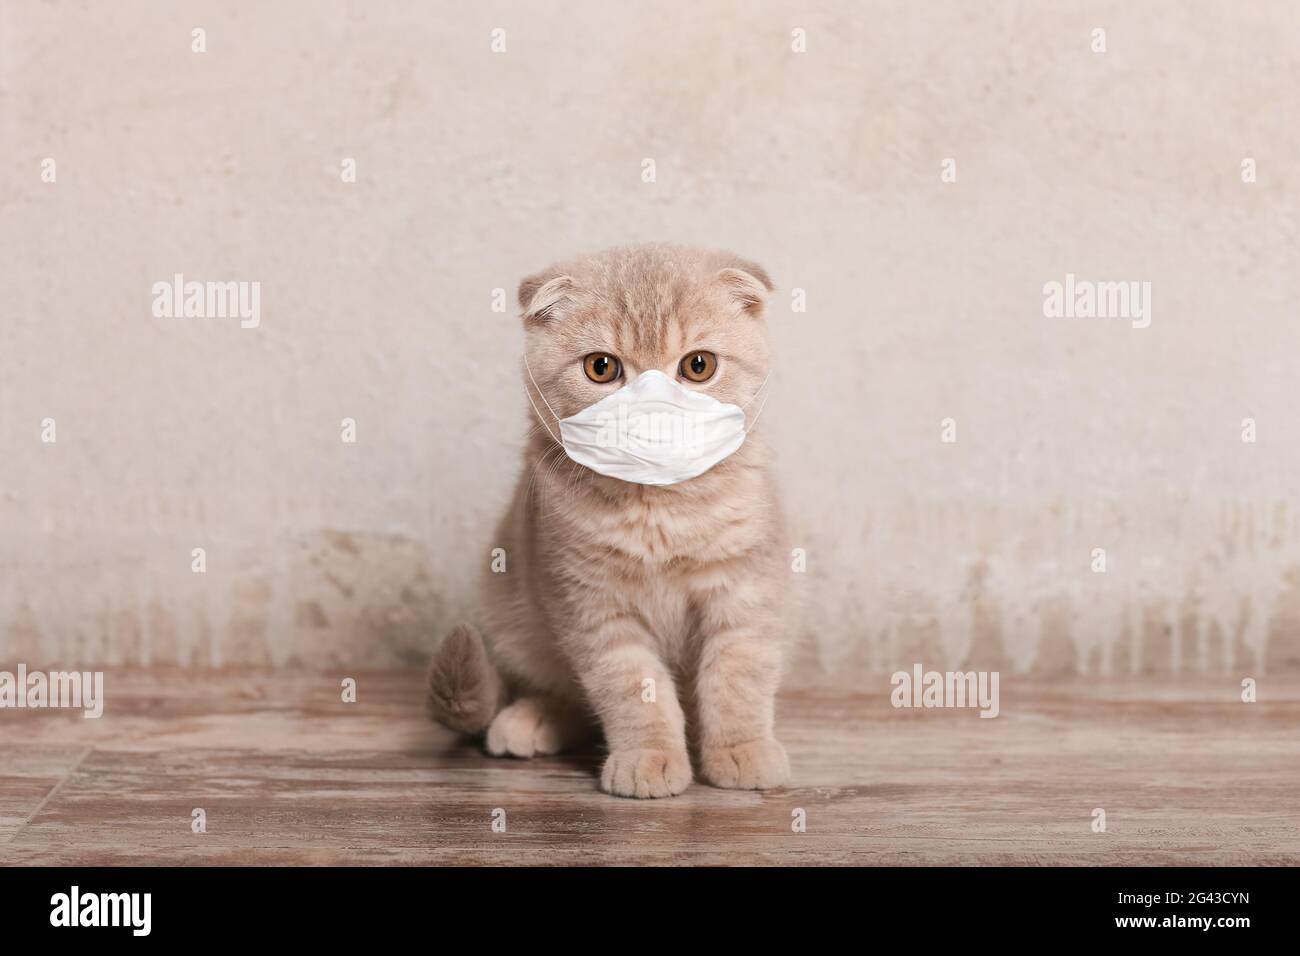 Cat in maschera medica. Coronavirus e rimanere a casa Foto Stock